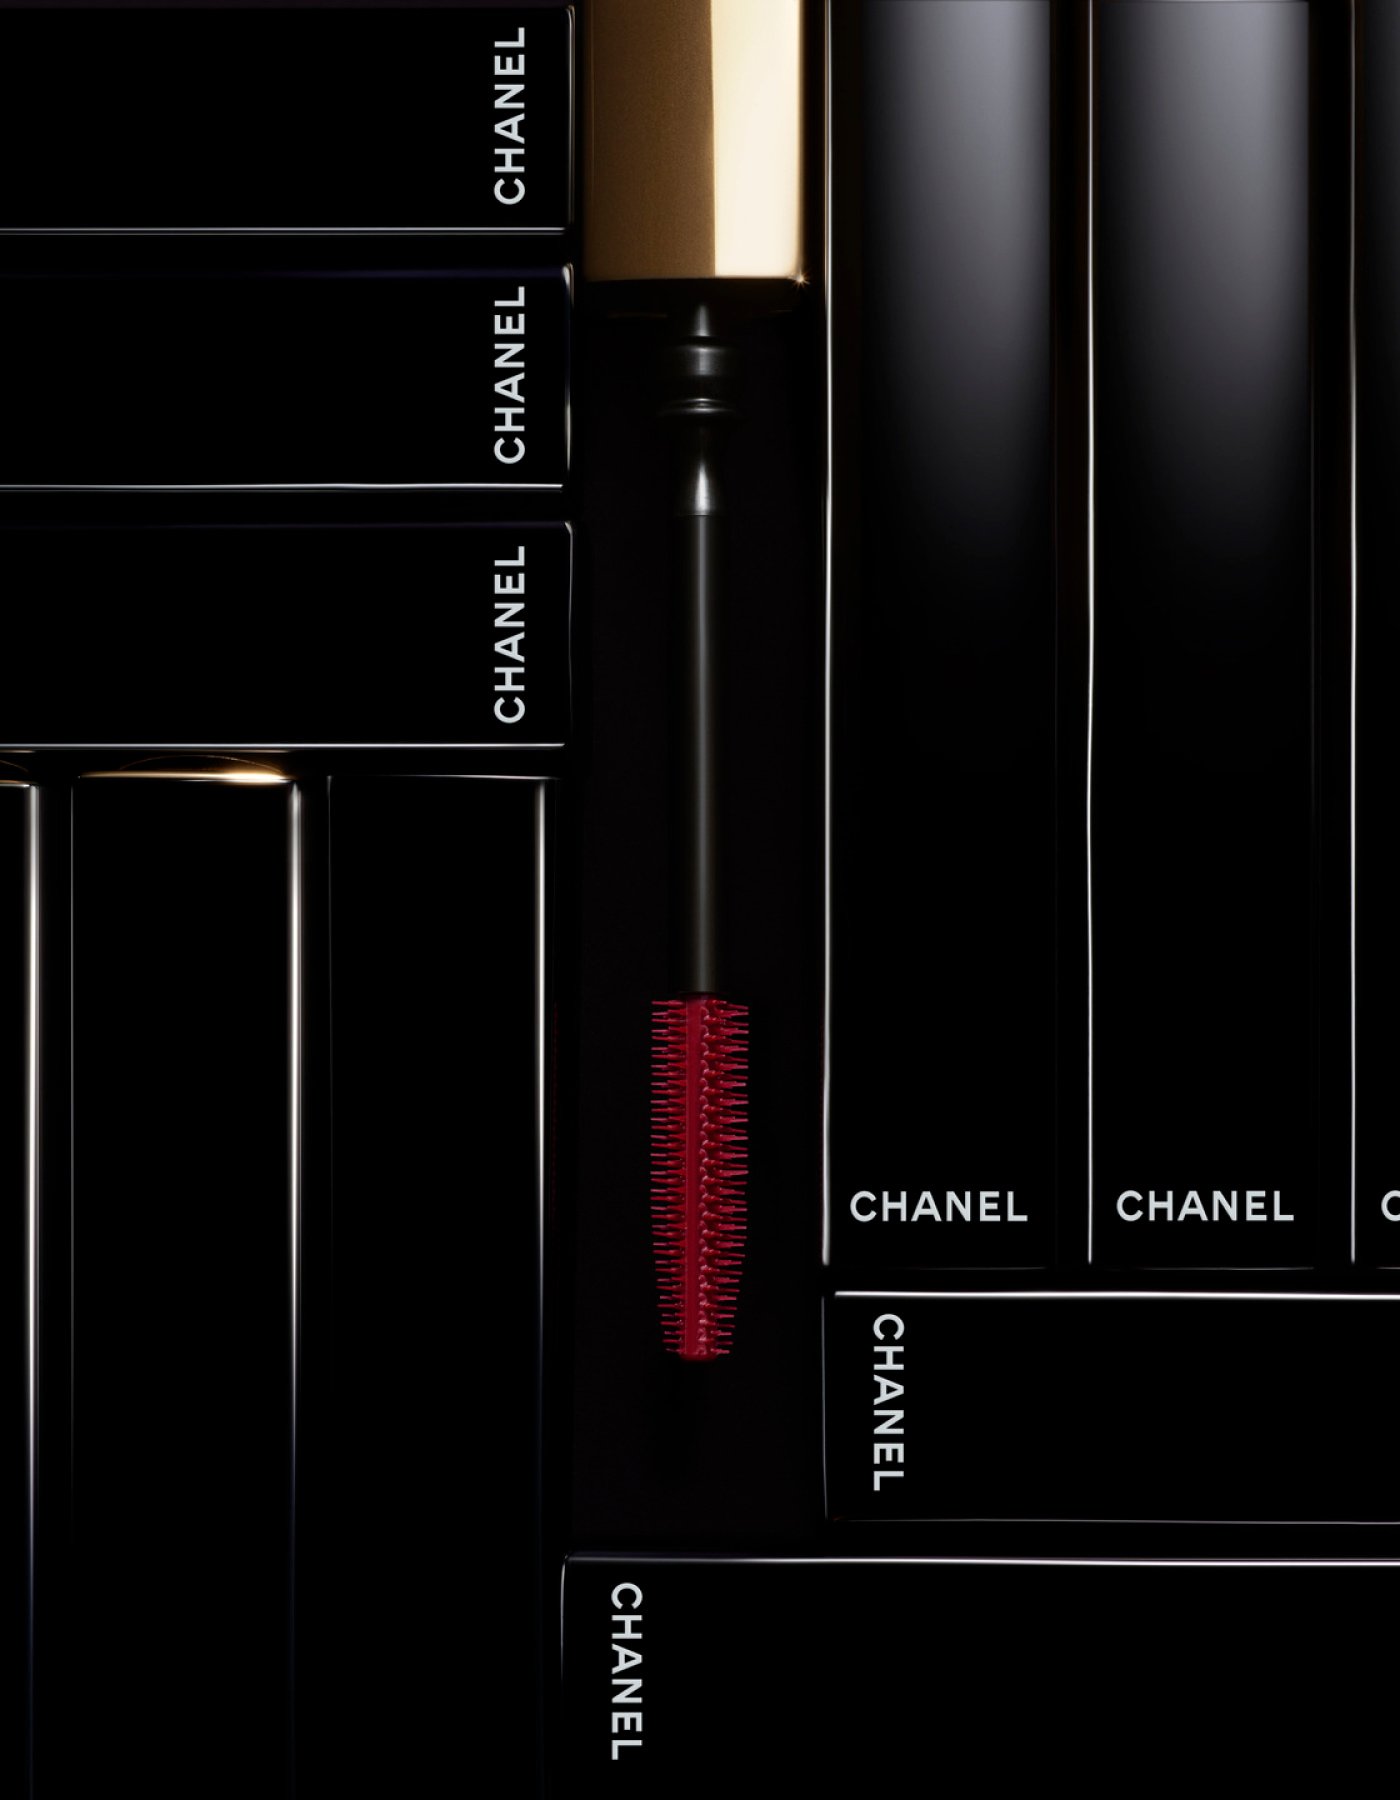 Chanel: Introducing NOIR ALLURE Mascara